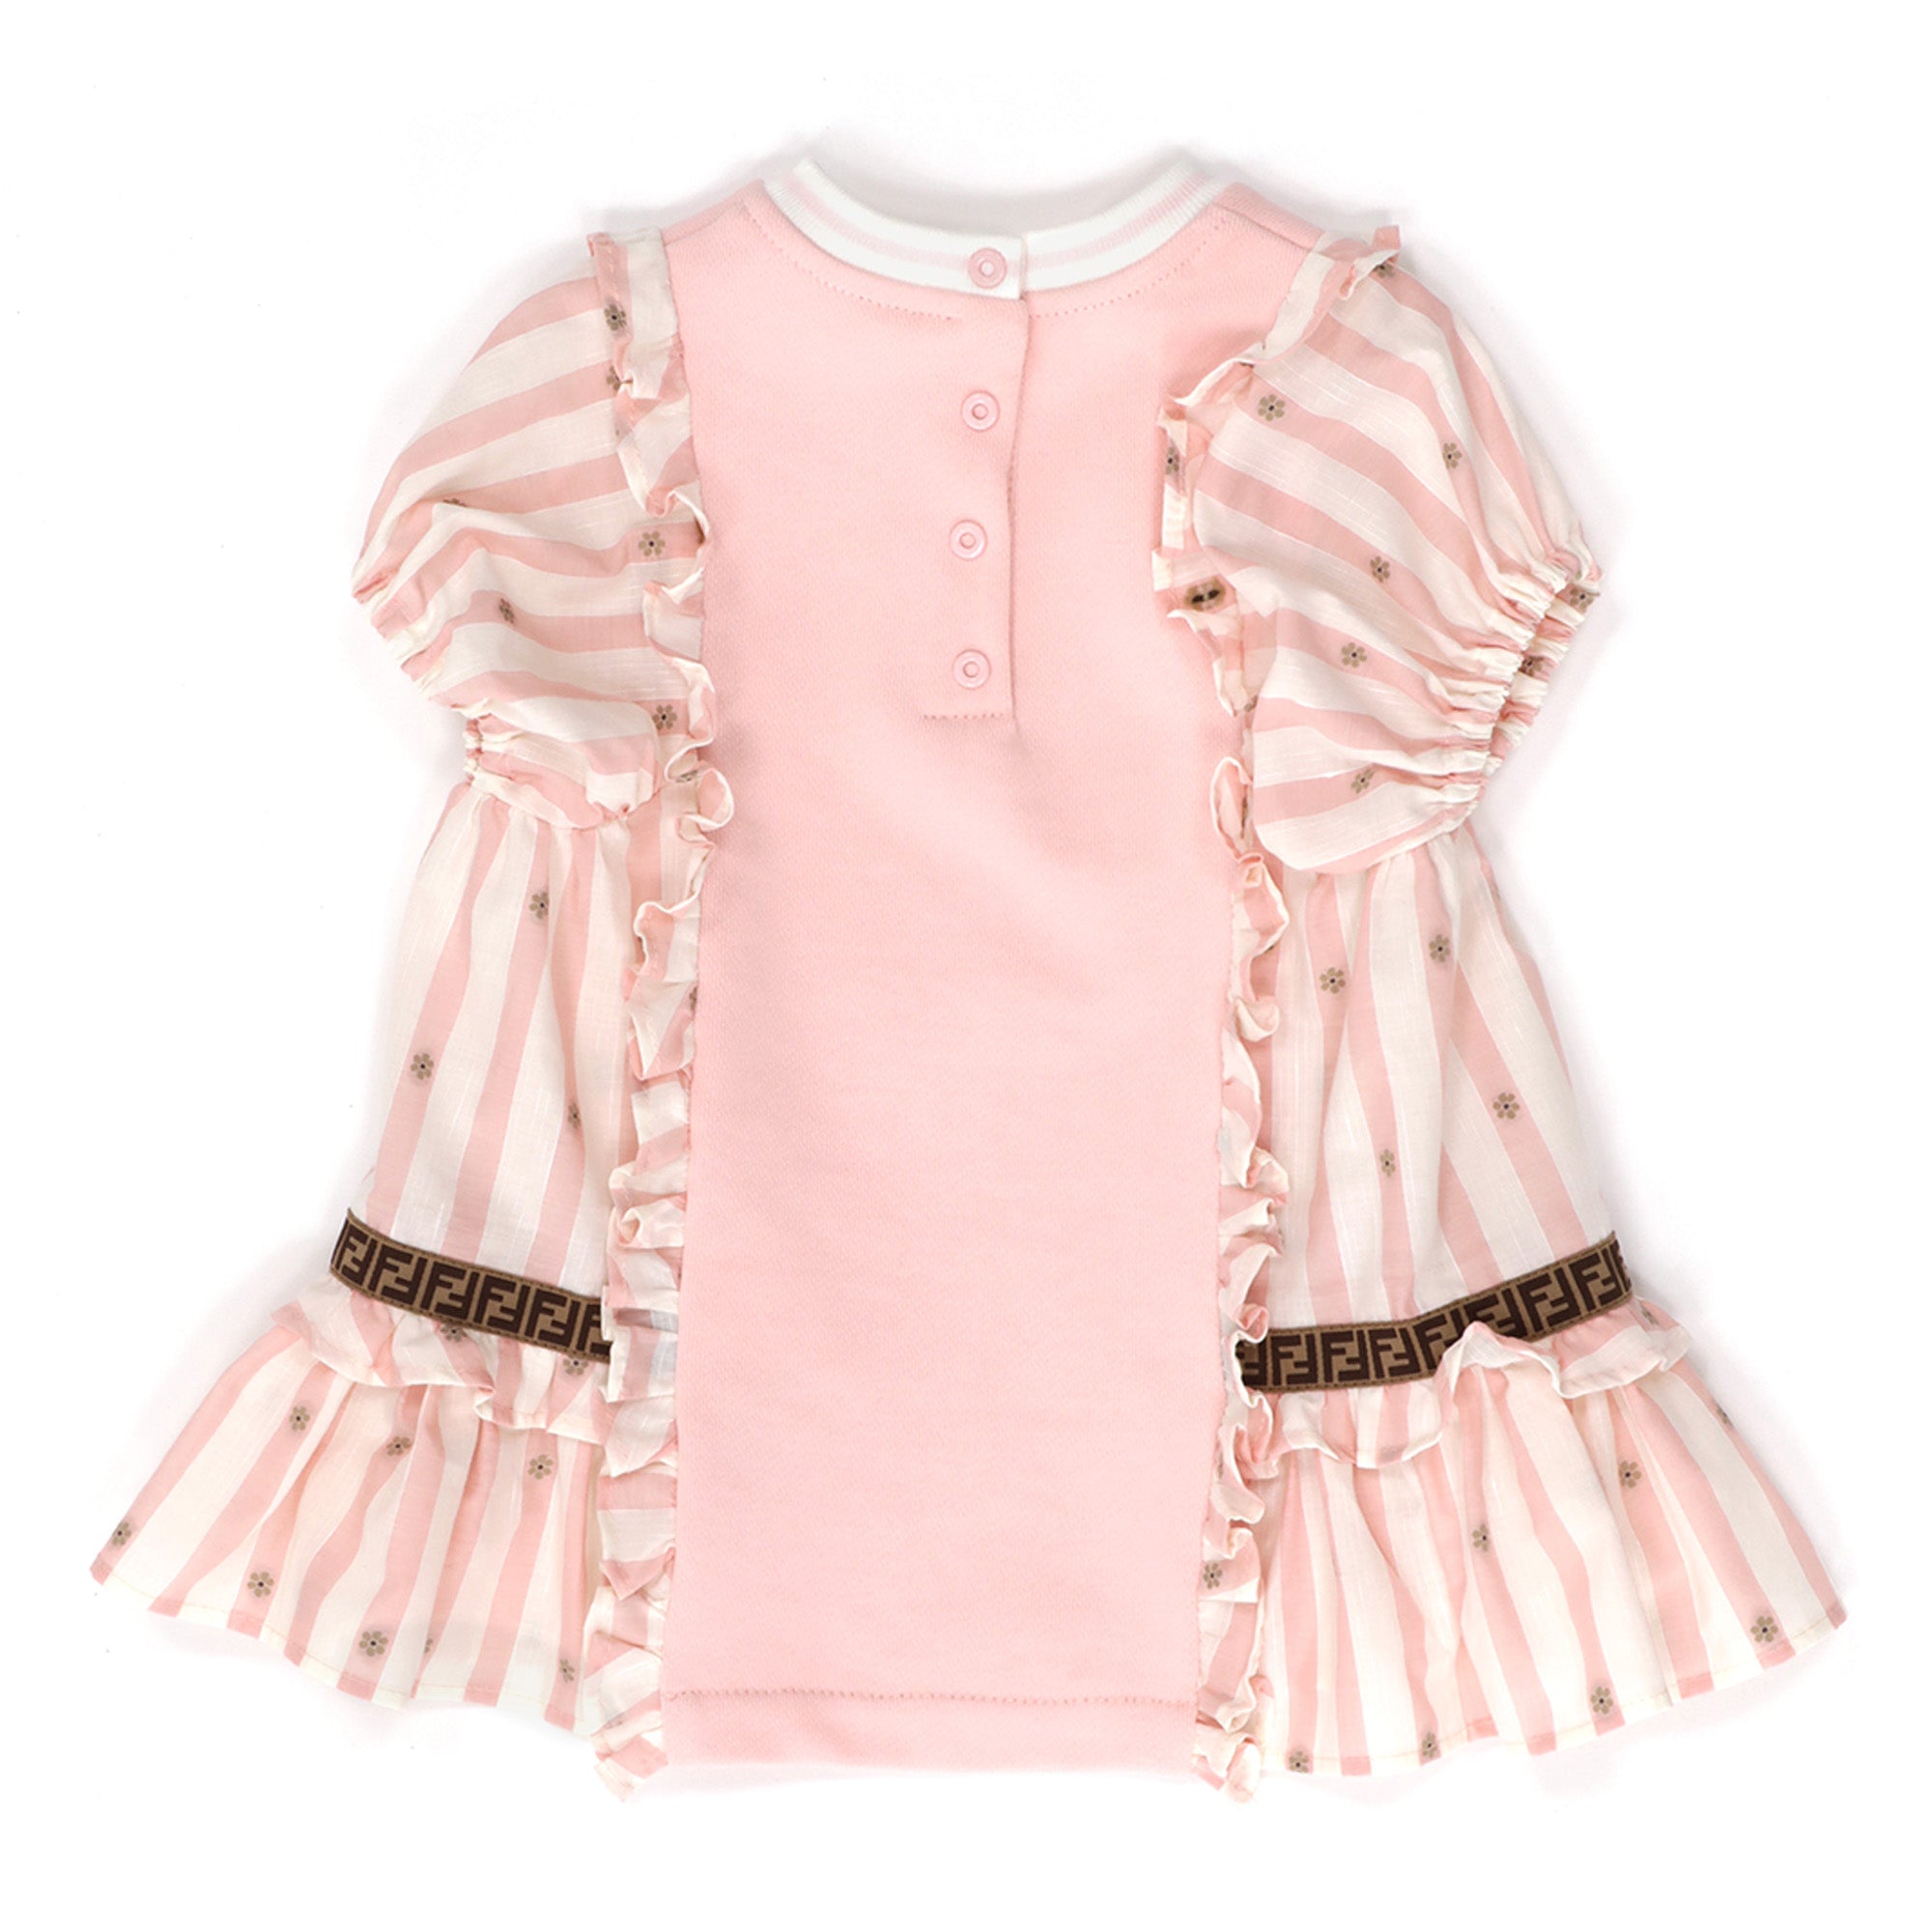 Fendi Baby Girls Pink Striped Dress